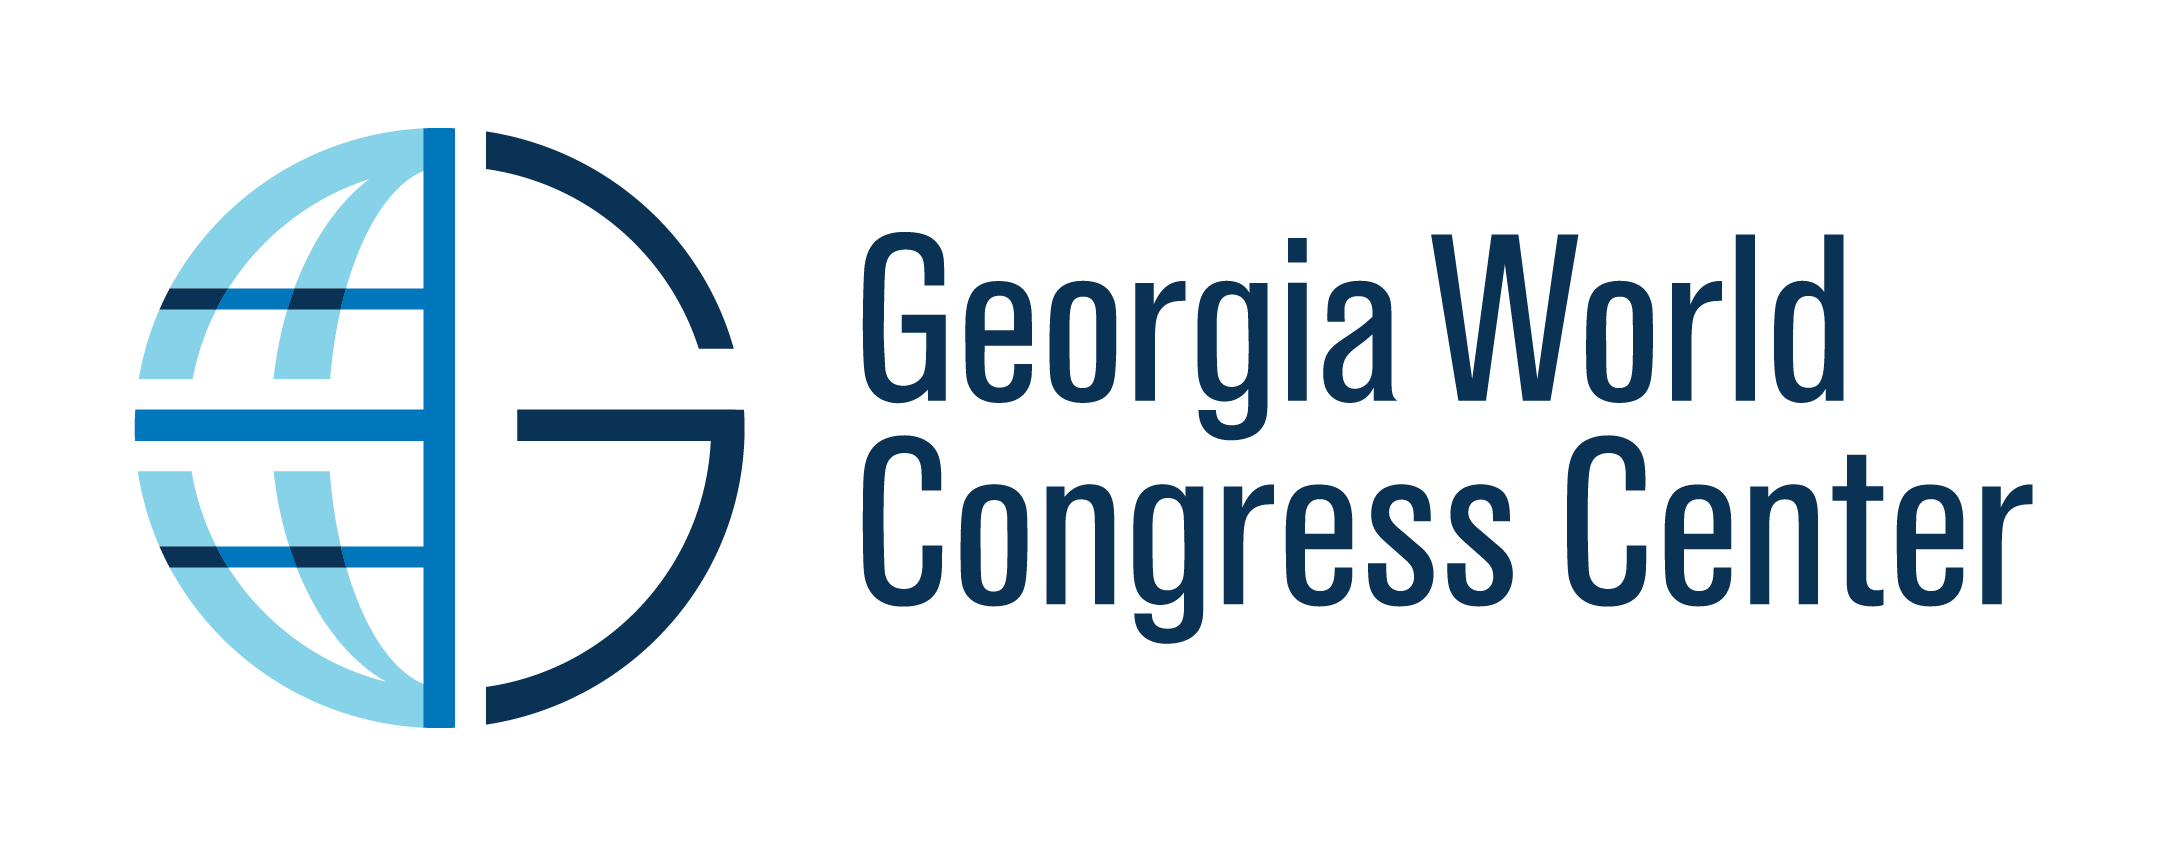 Georgia World Congress Center logo